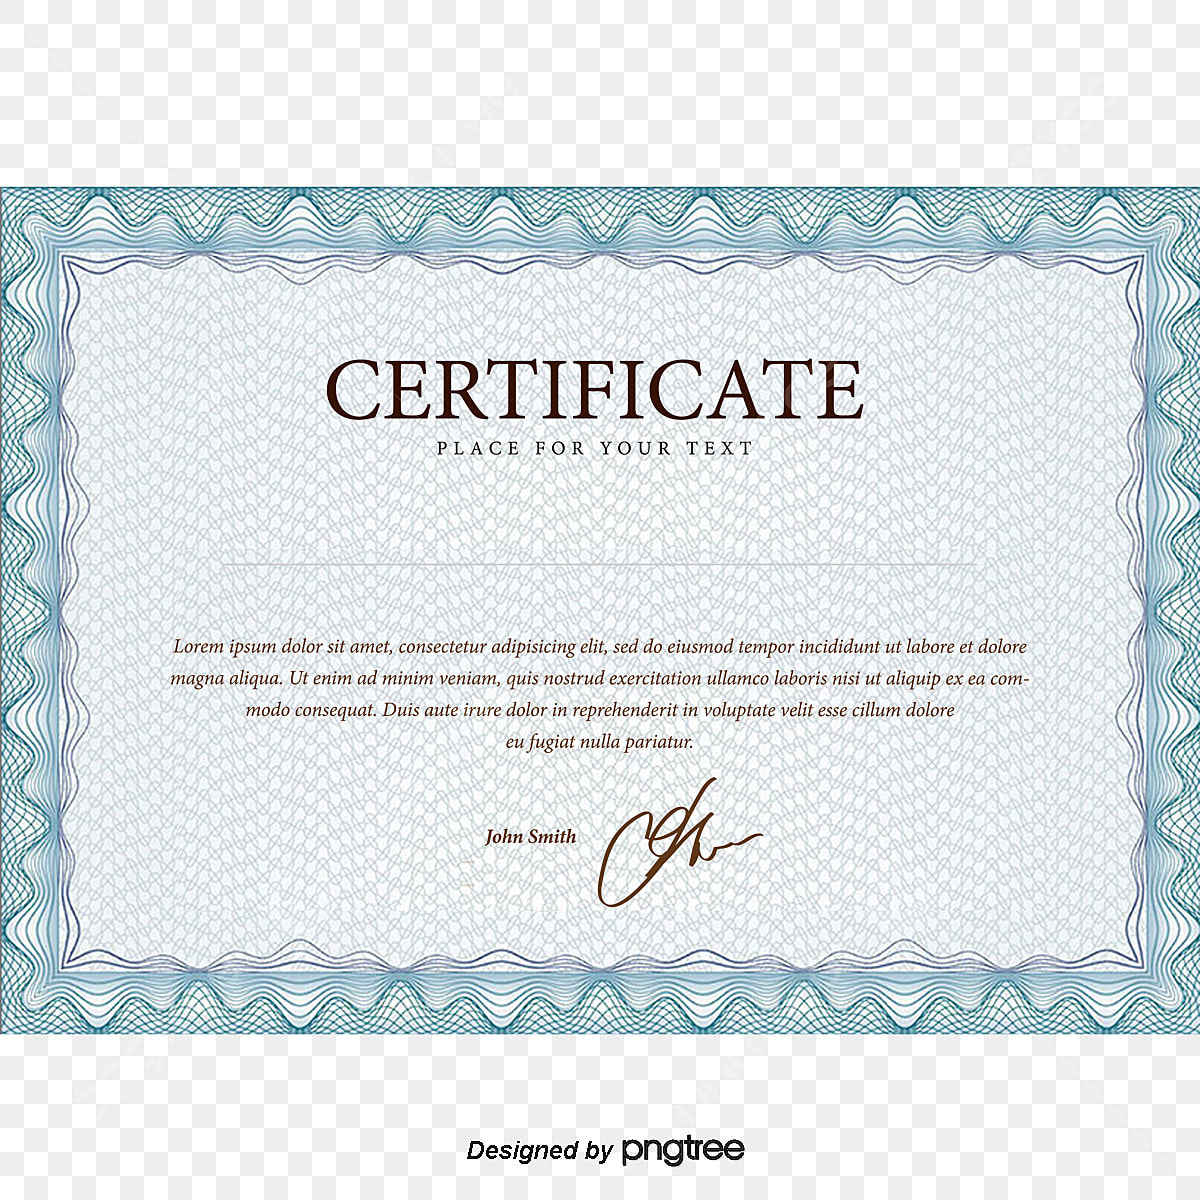 pngtree university degree certificate png image 2862652 - Ukuhunyushwa kwamaphupho